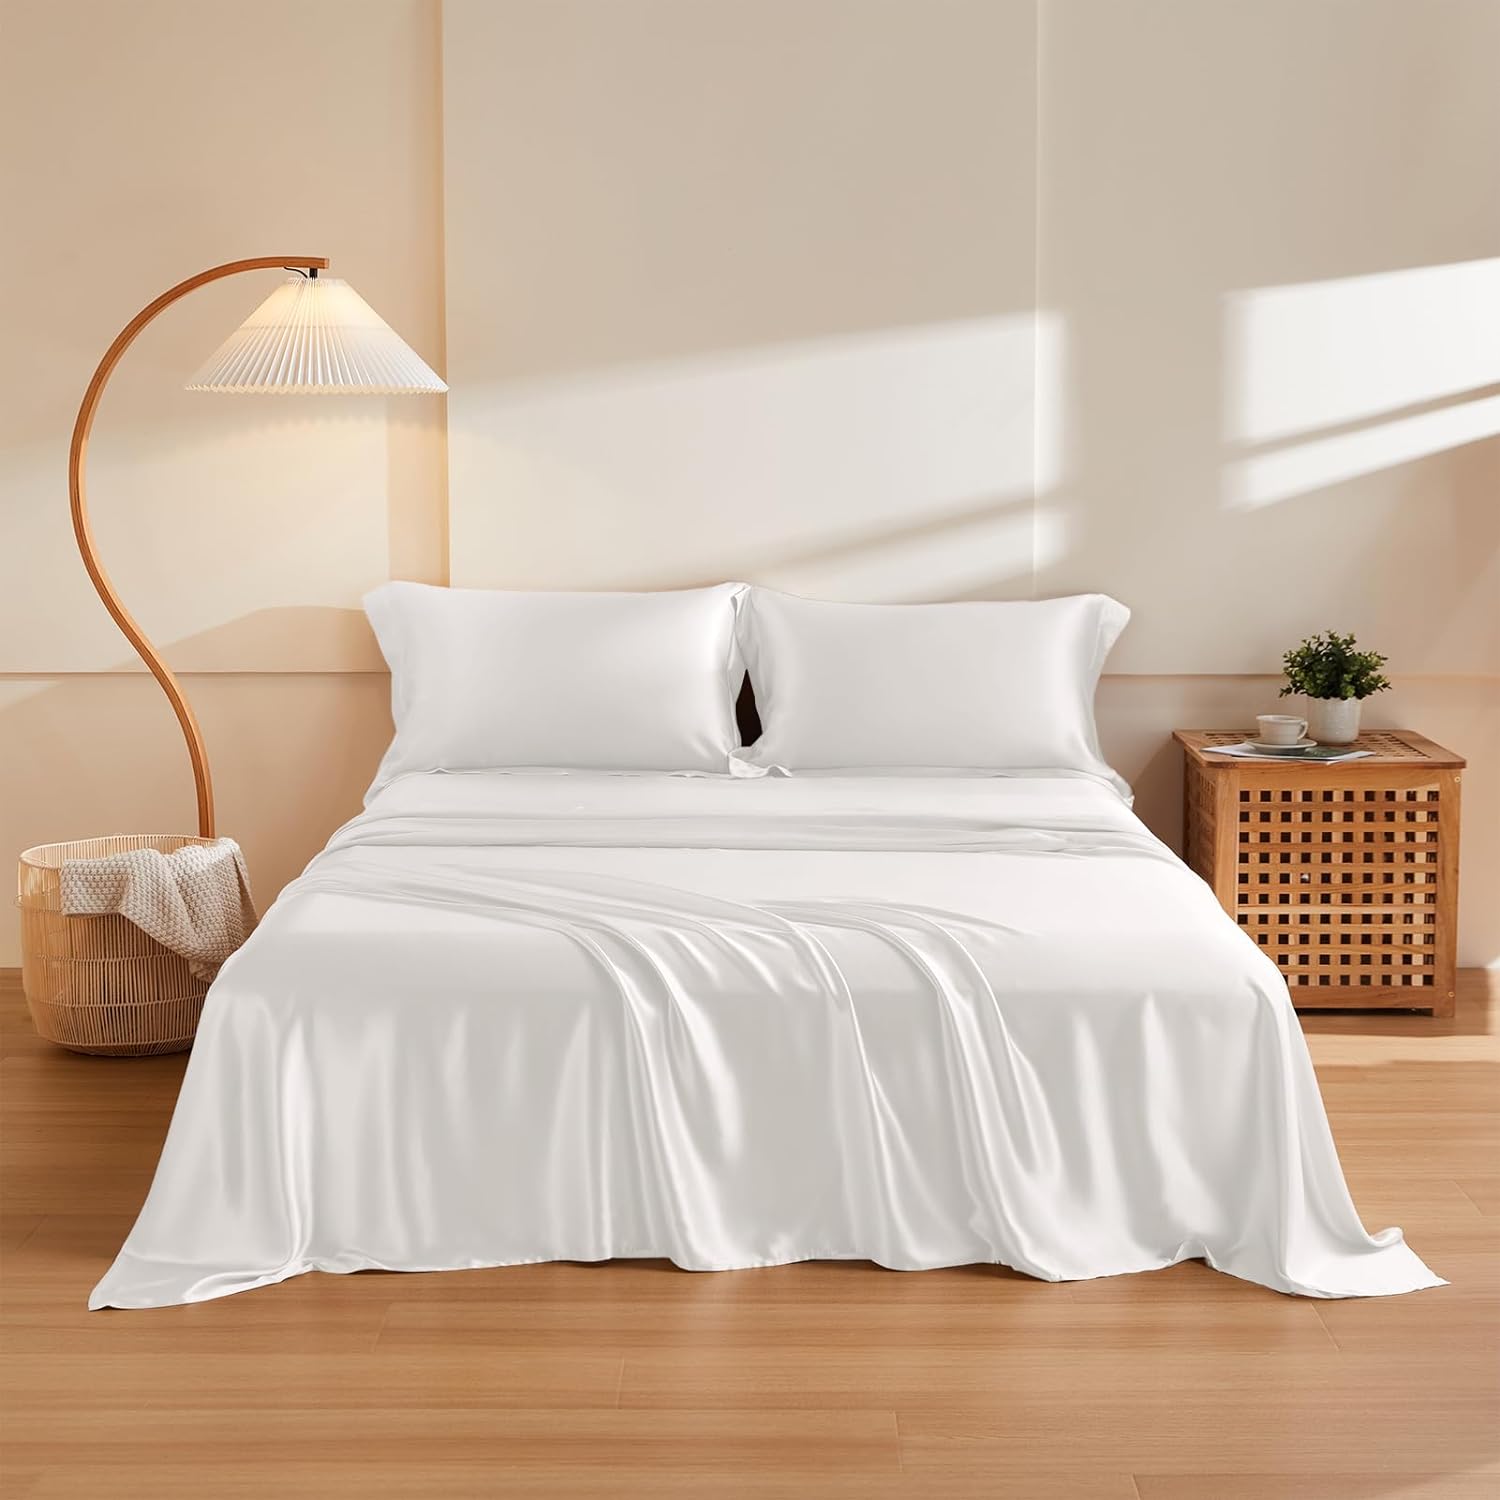 THXSILK Silk Sheet Set 4 Pcs, 6A+ Top Grade 100% Natural Mulberry Silk Bed Sheets, Luxury Bedding Sets -Ultra Soft Durable, 1 Fitted Sheet, 1 Flat Sheet and 2 Pillow Shams (Queen, White)